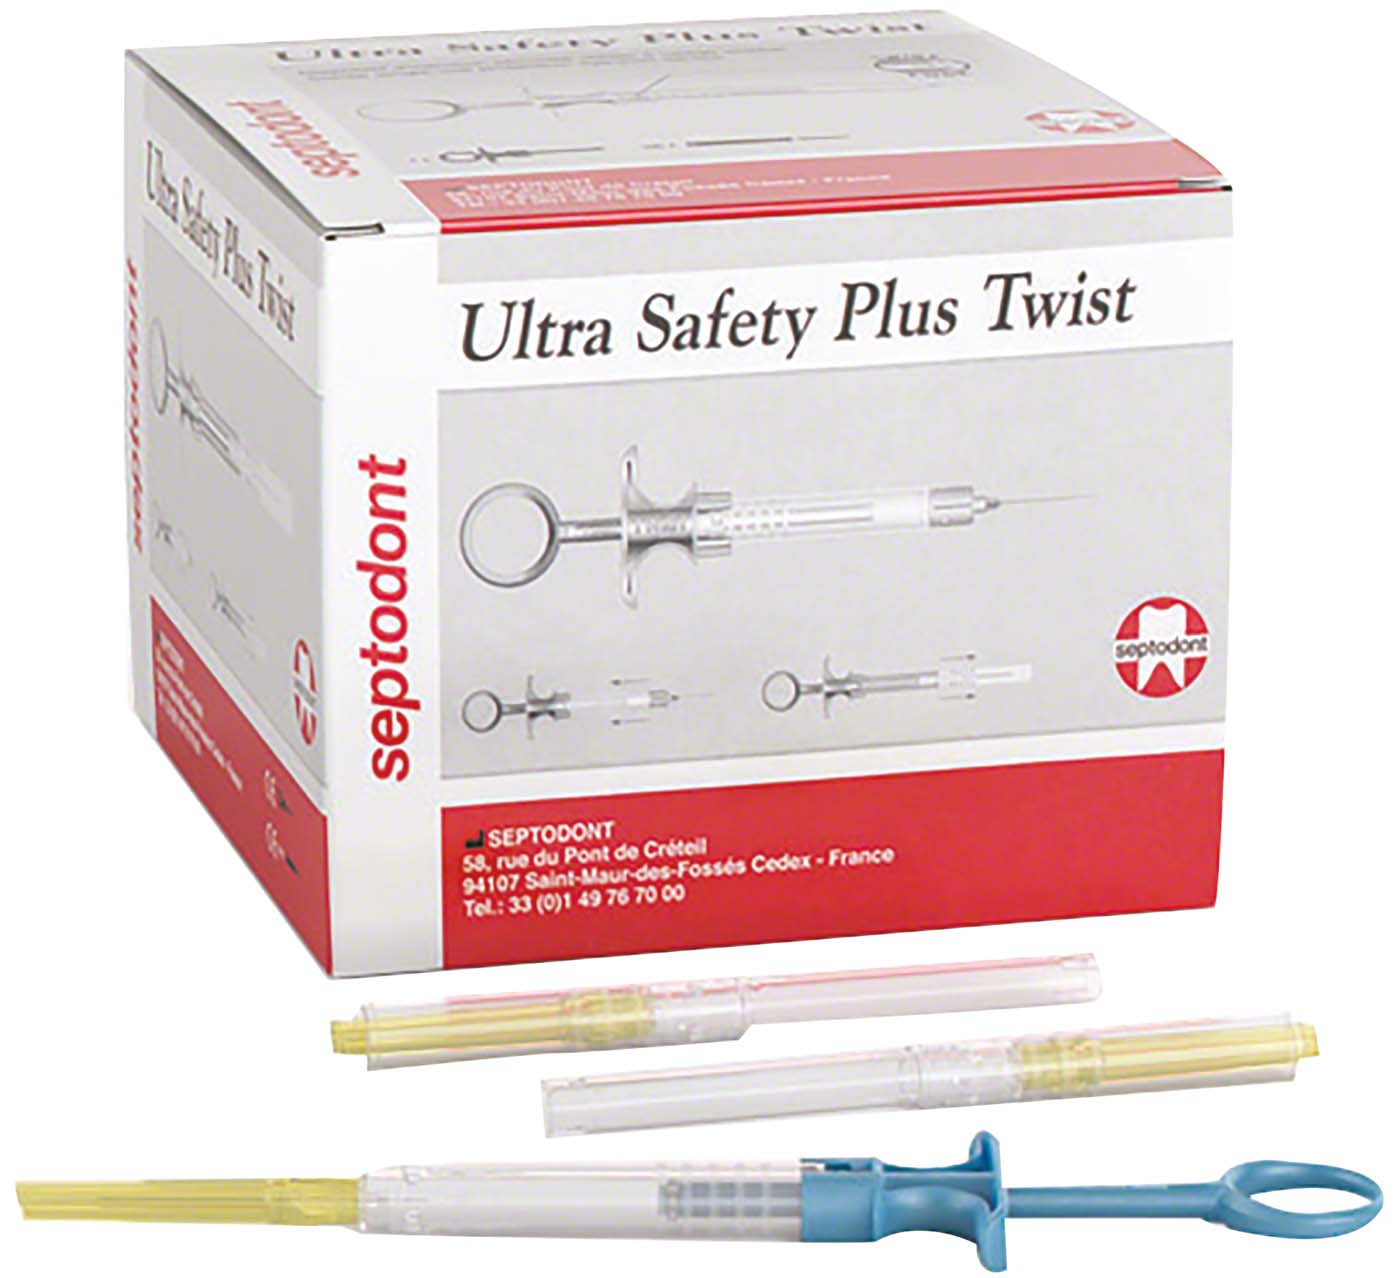 Ultra Safety Plus Twist Septodont